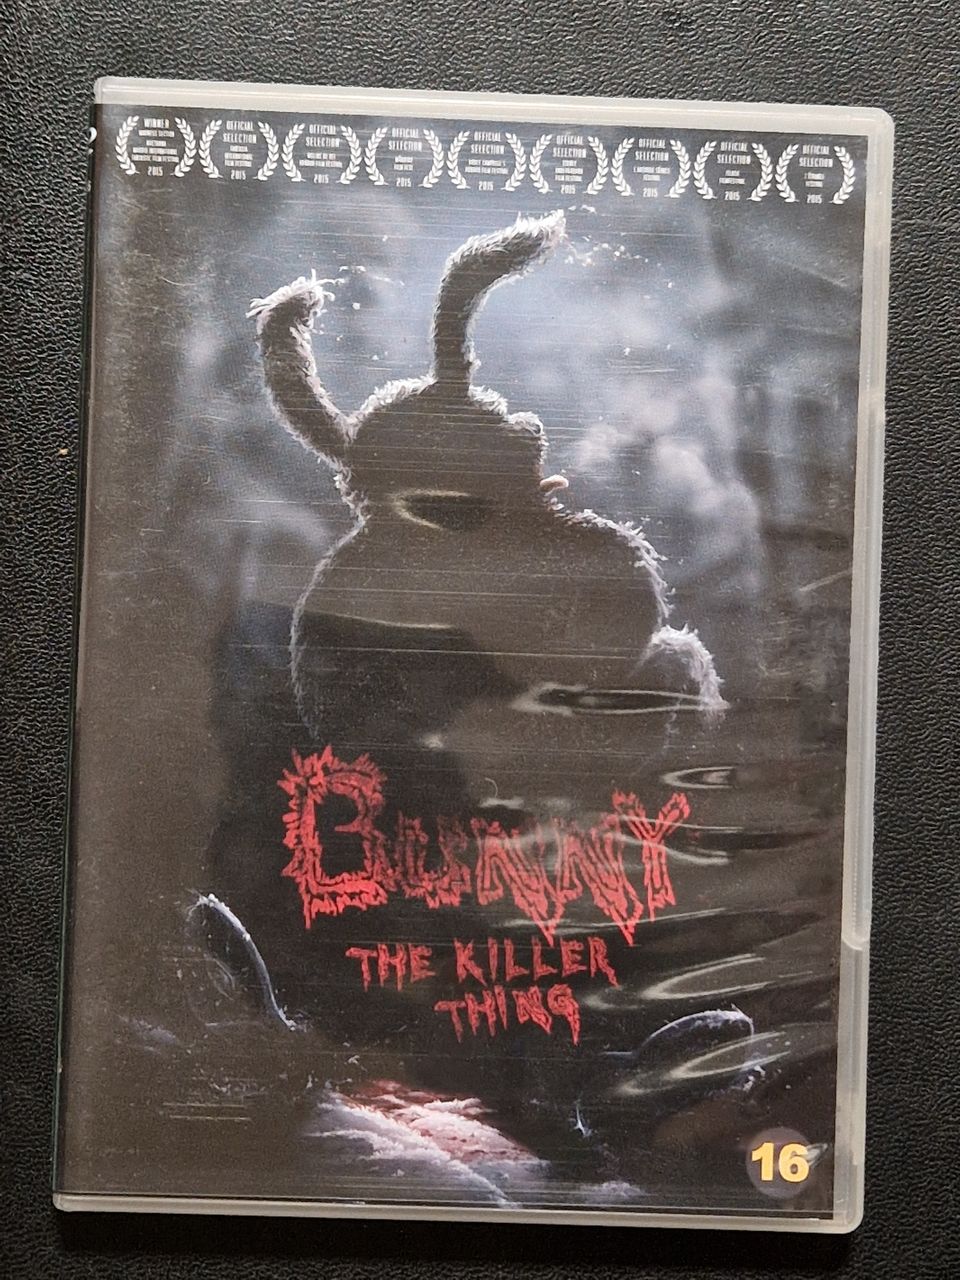 Bunny the Killer Thing - FI DVD